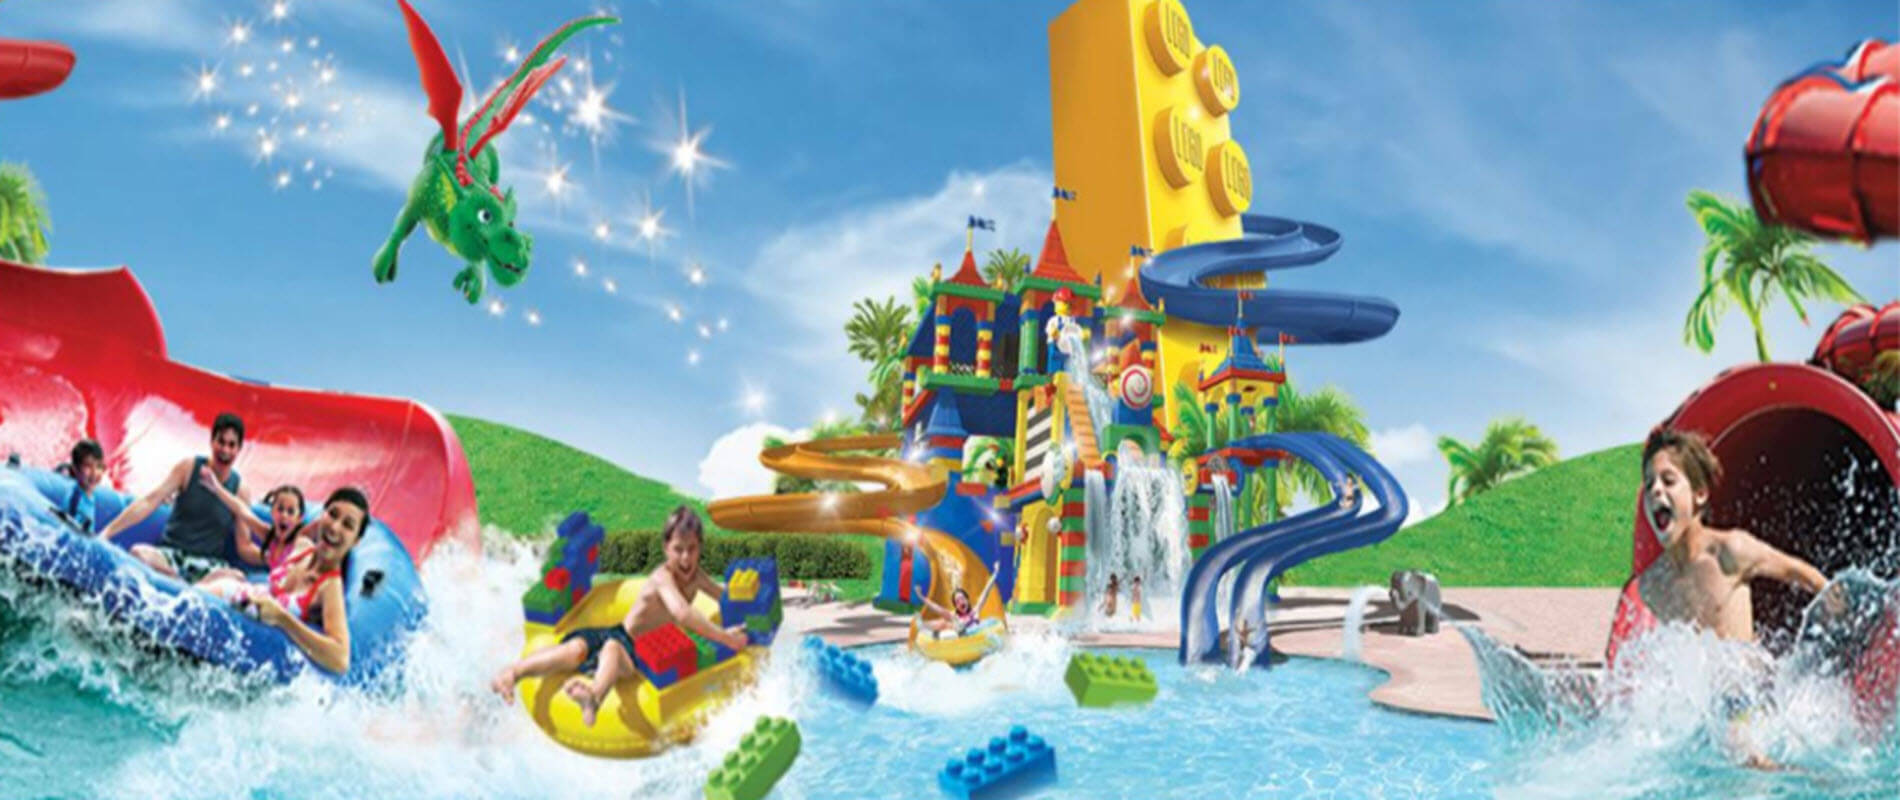 Legoland Dubai - Theme Parks